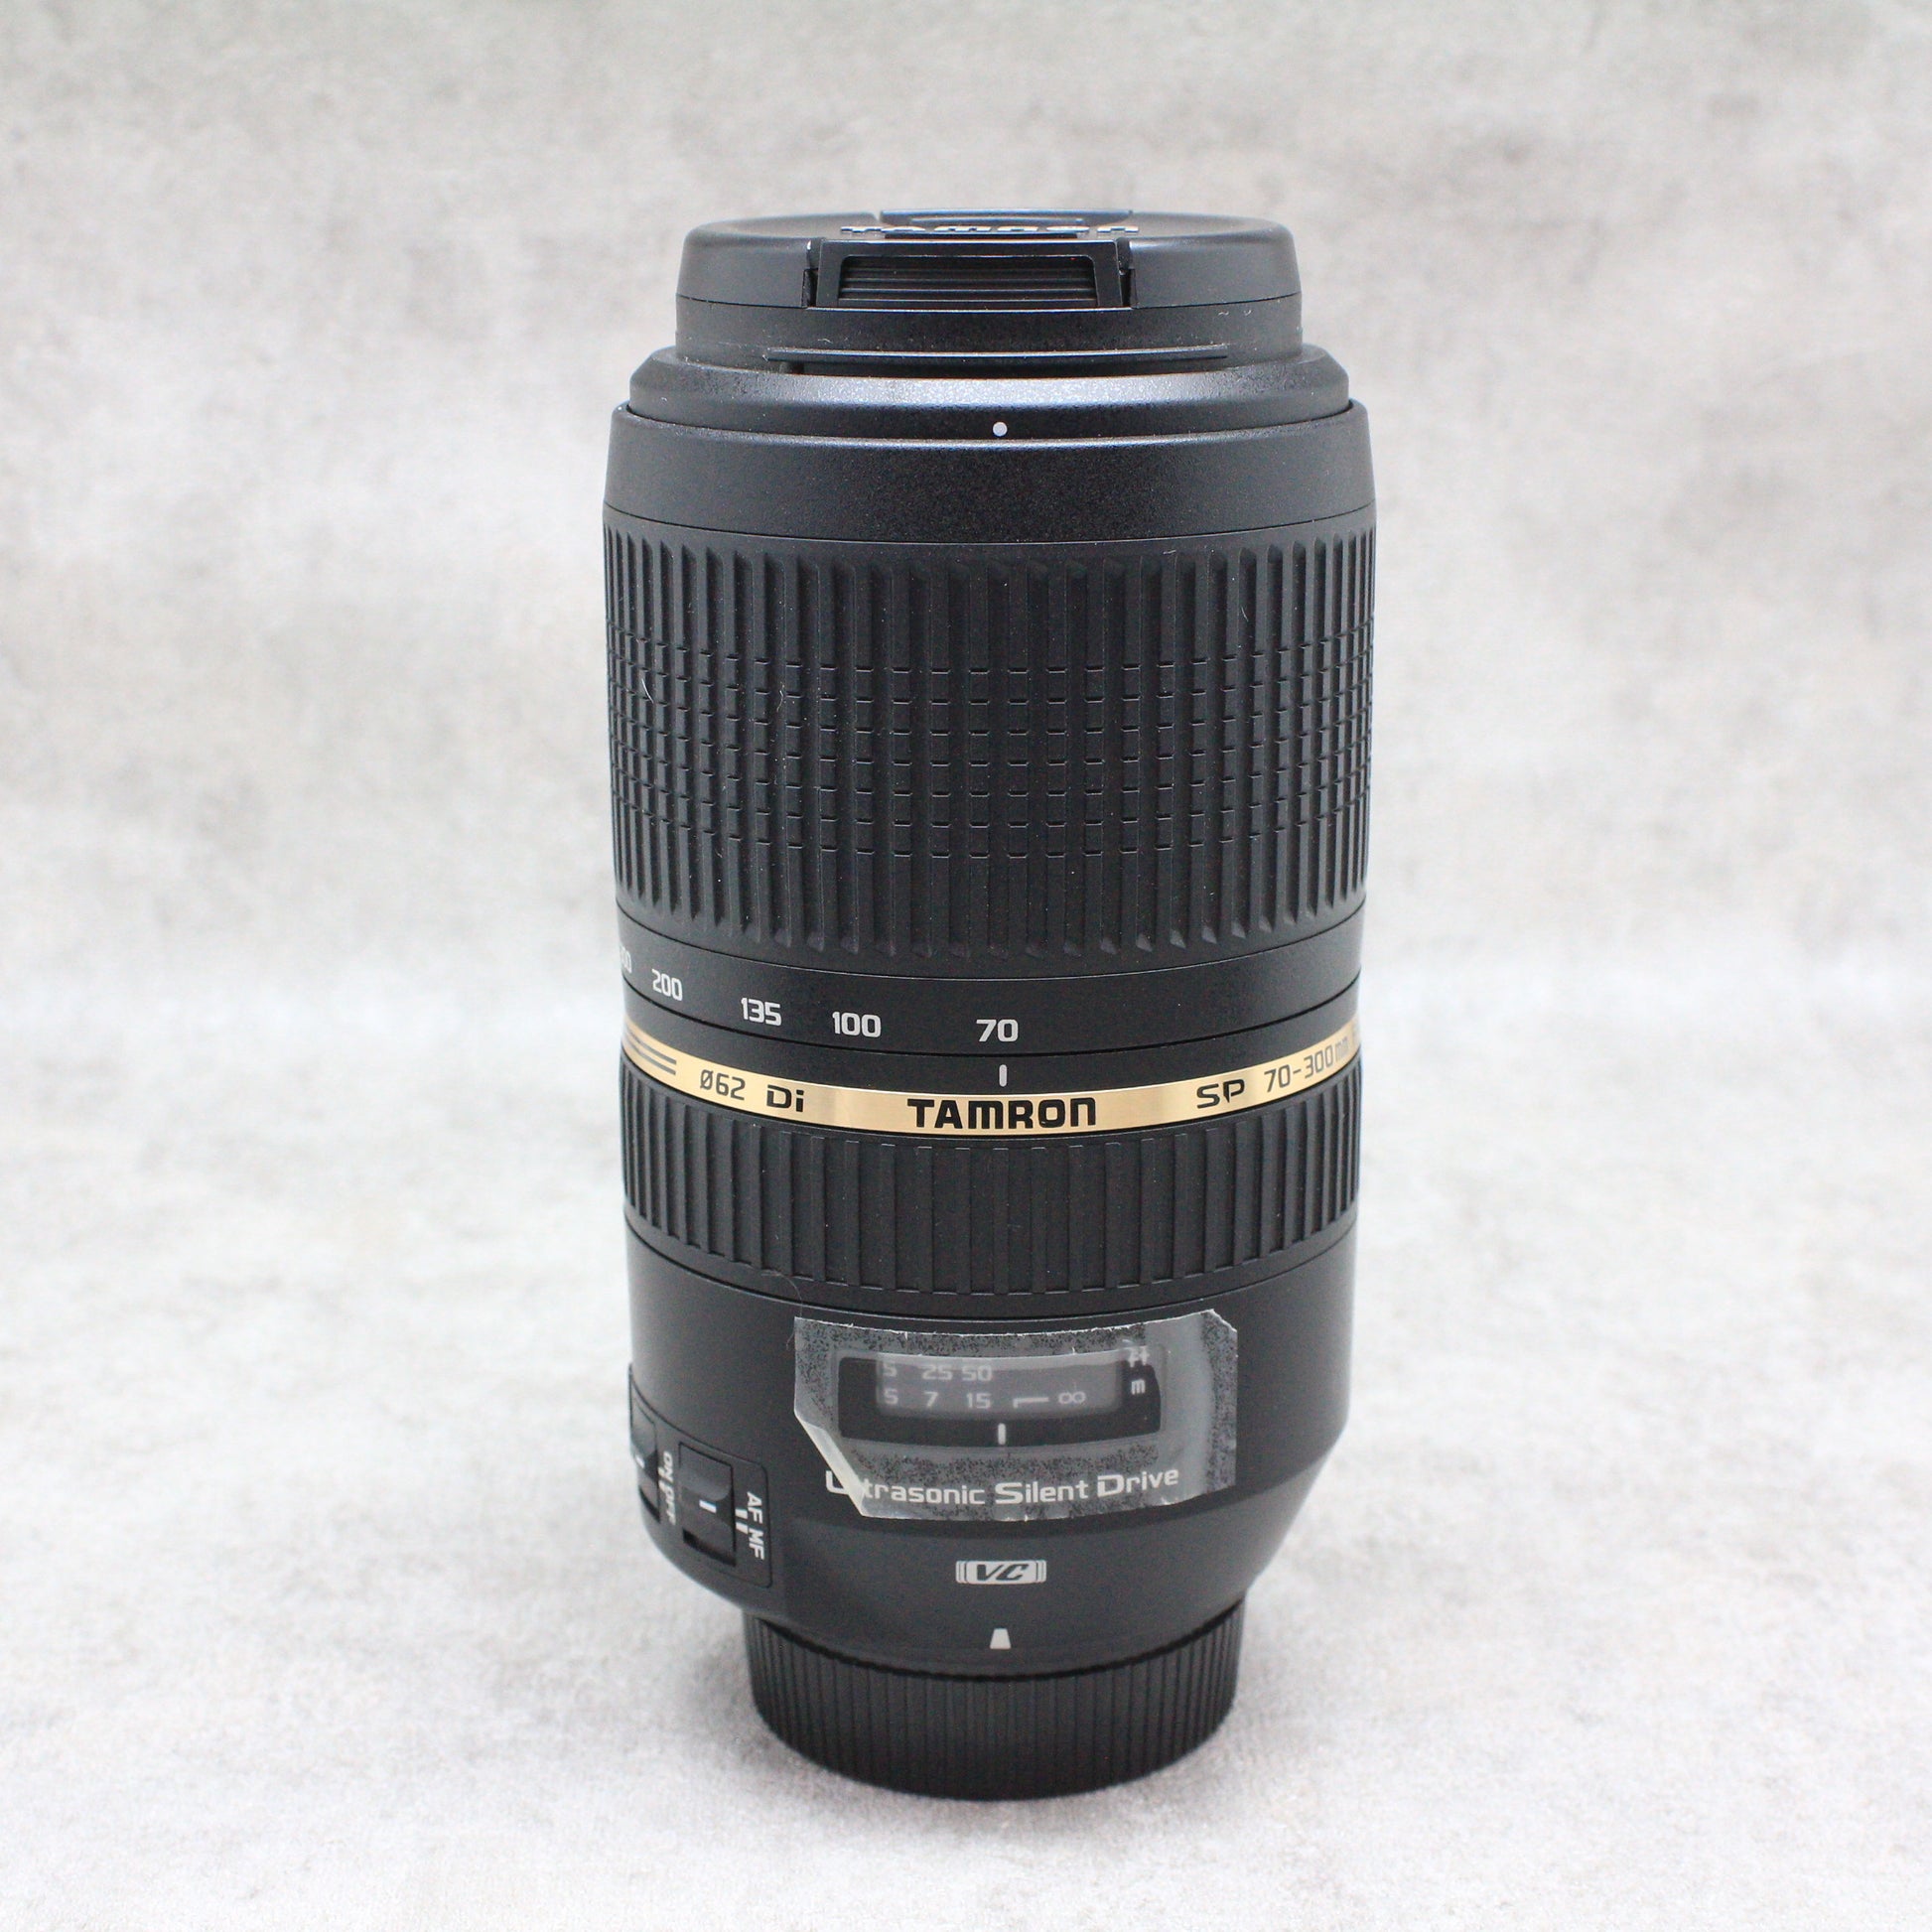 中古品TAMRON 70-300mm F4-5.6 Di VC USD 〈Nikon用〉【10月28日(